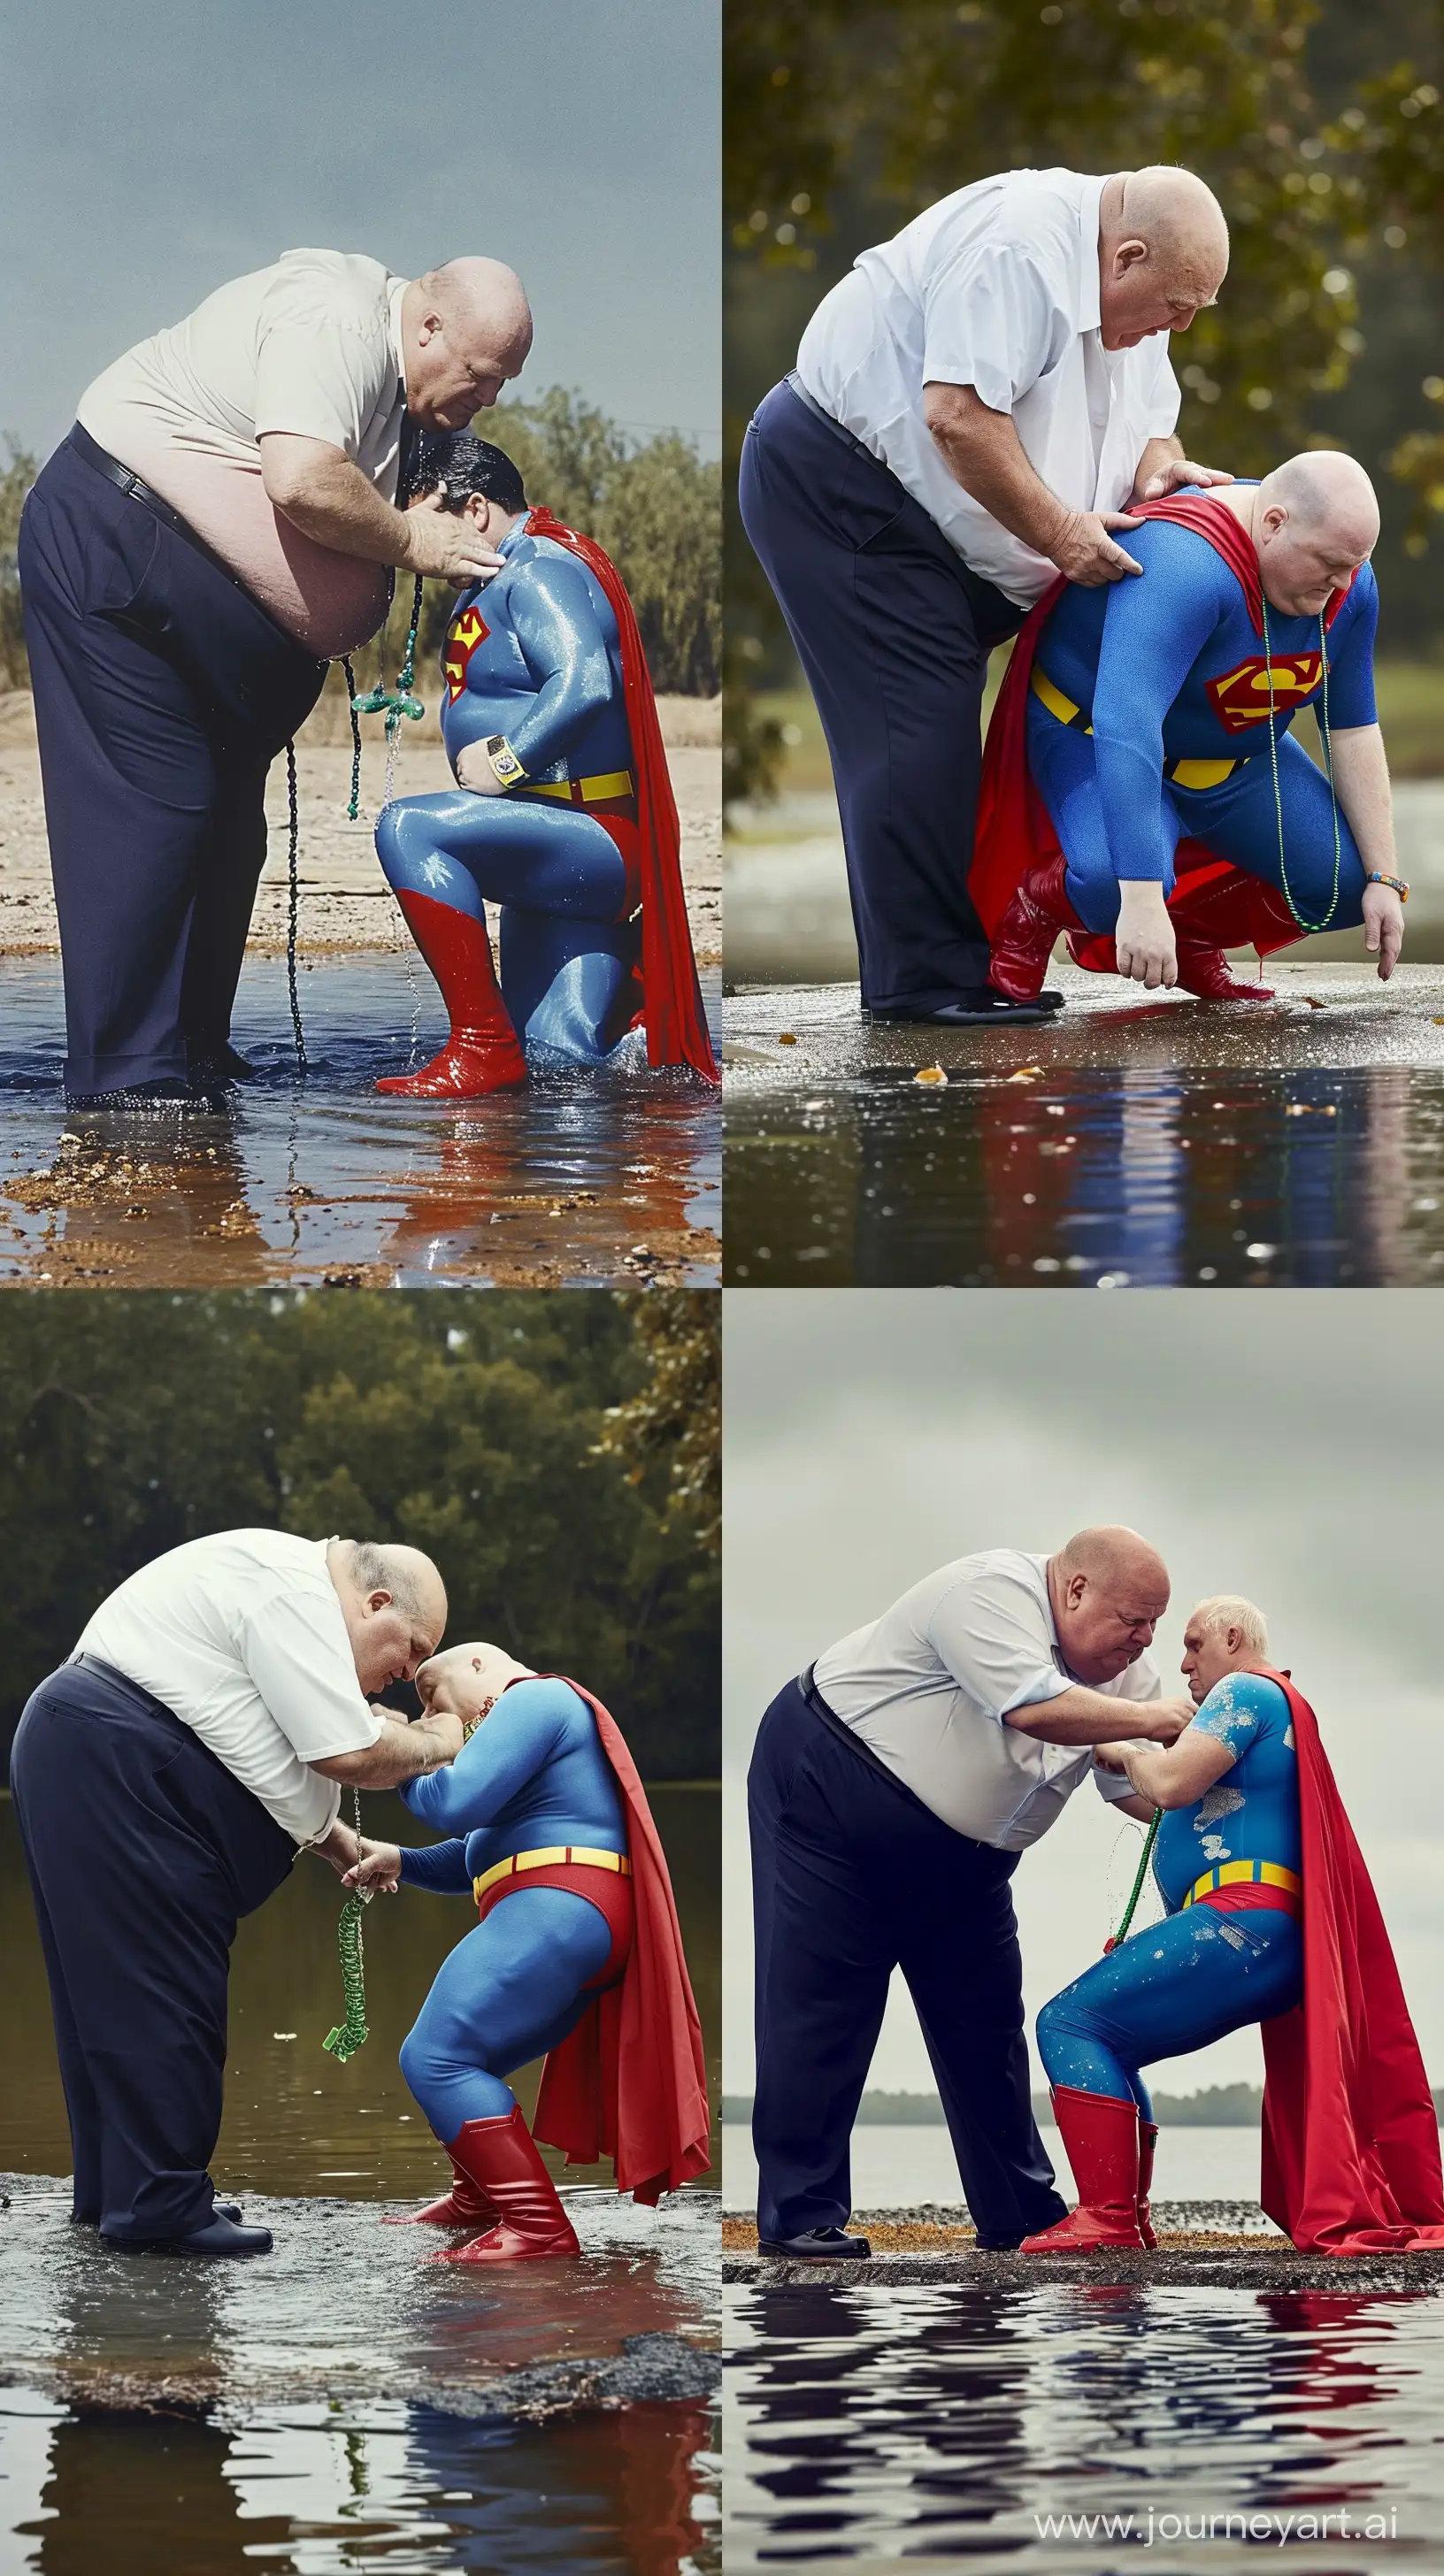 Elderly-Businessman-Assists-Aquatic-Superhero-in-Unique-Ritual-Outdoors